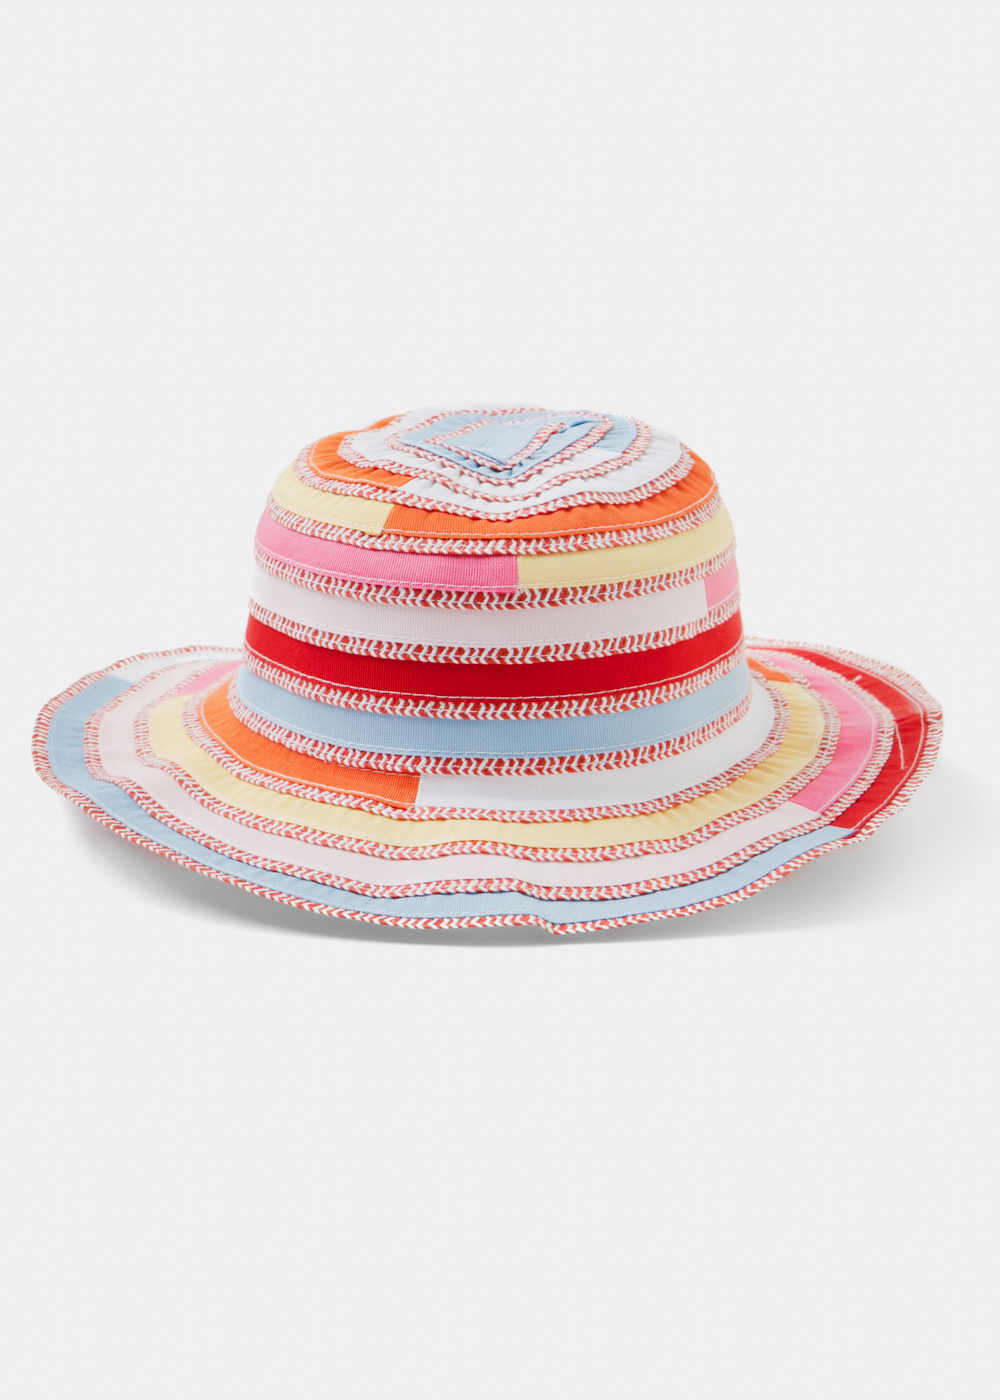 Girls Multicolour Hat w/ Top Stitches